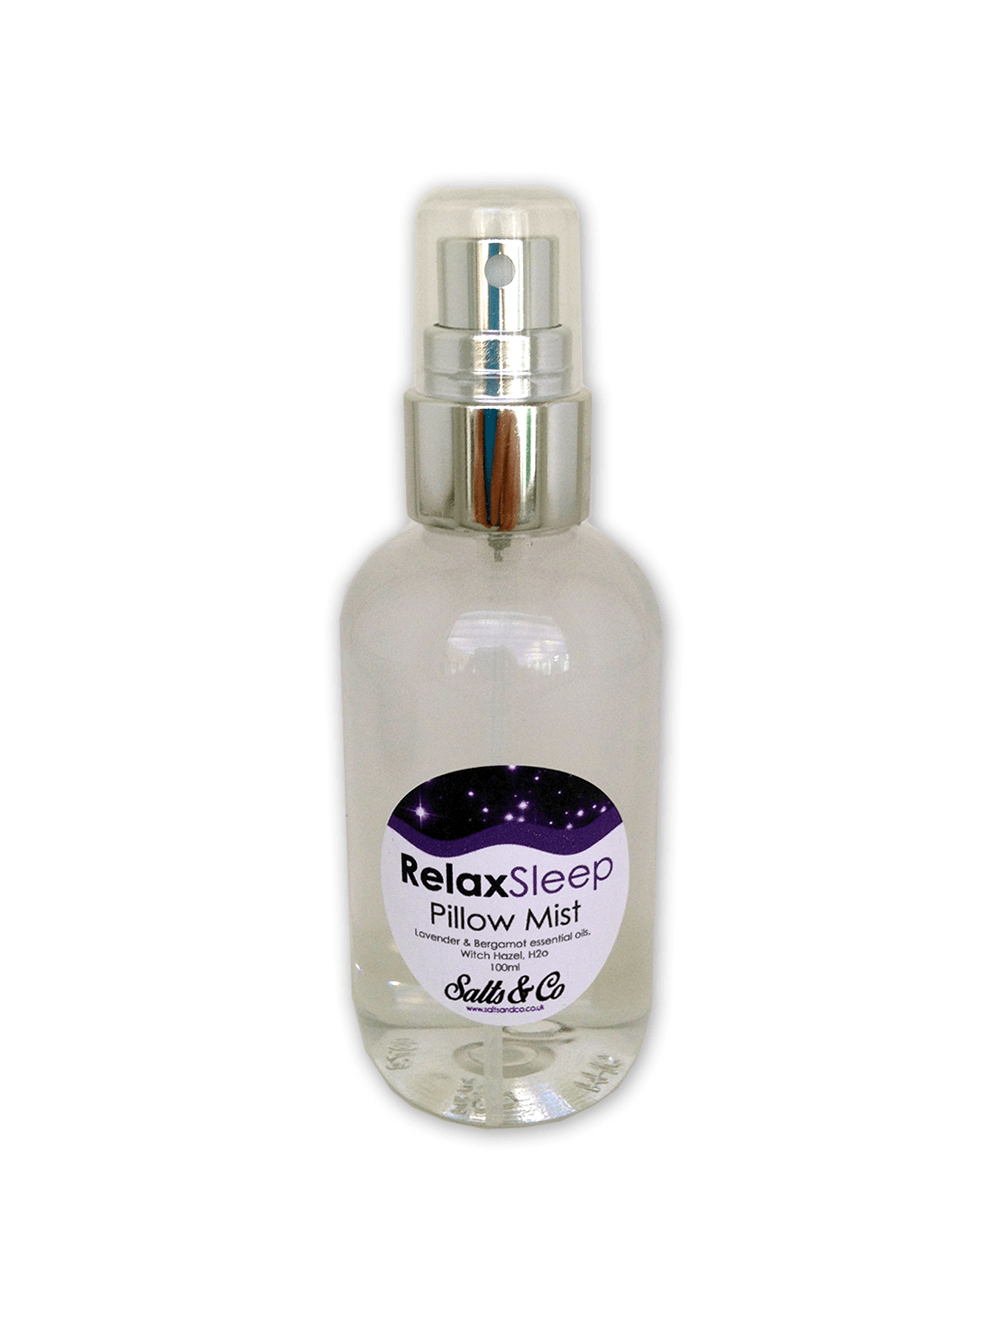 Relax Sleep Pillow Mist - Lavender & Bergamot essential oils